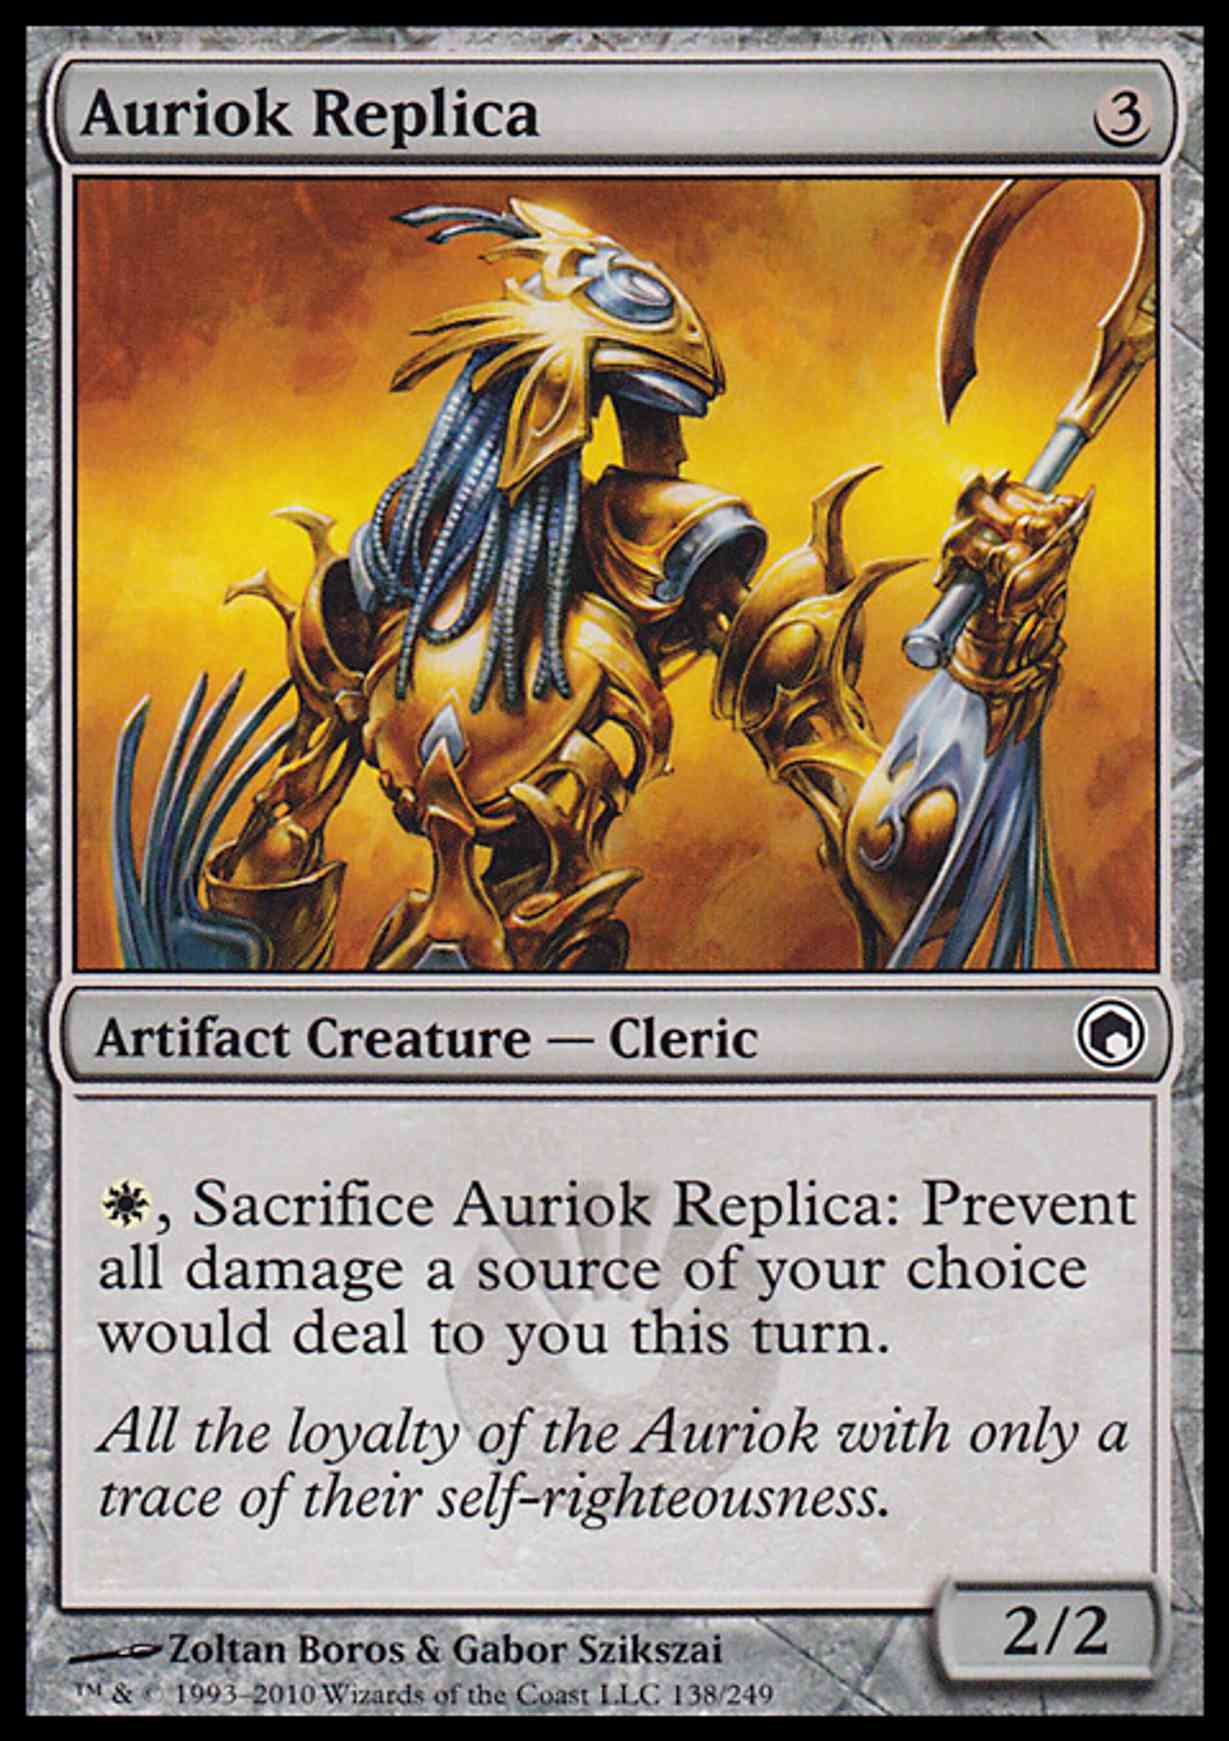 Auriok Replica magic card front